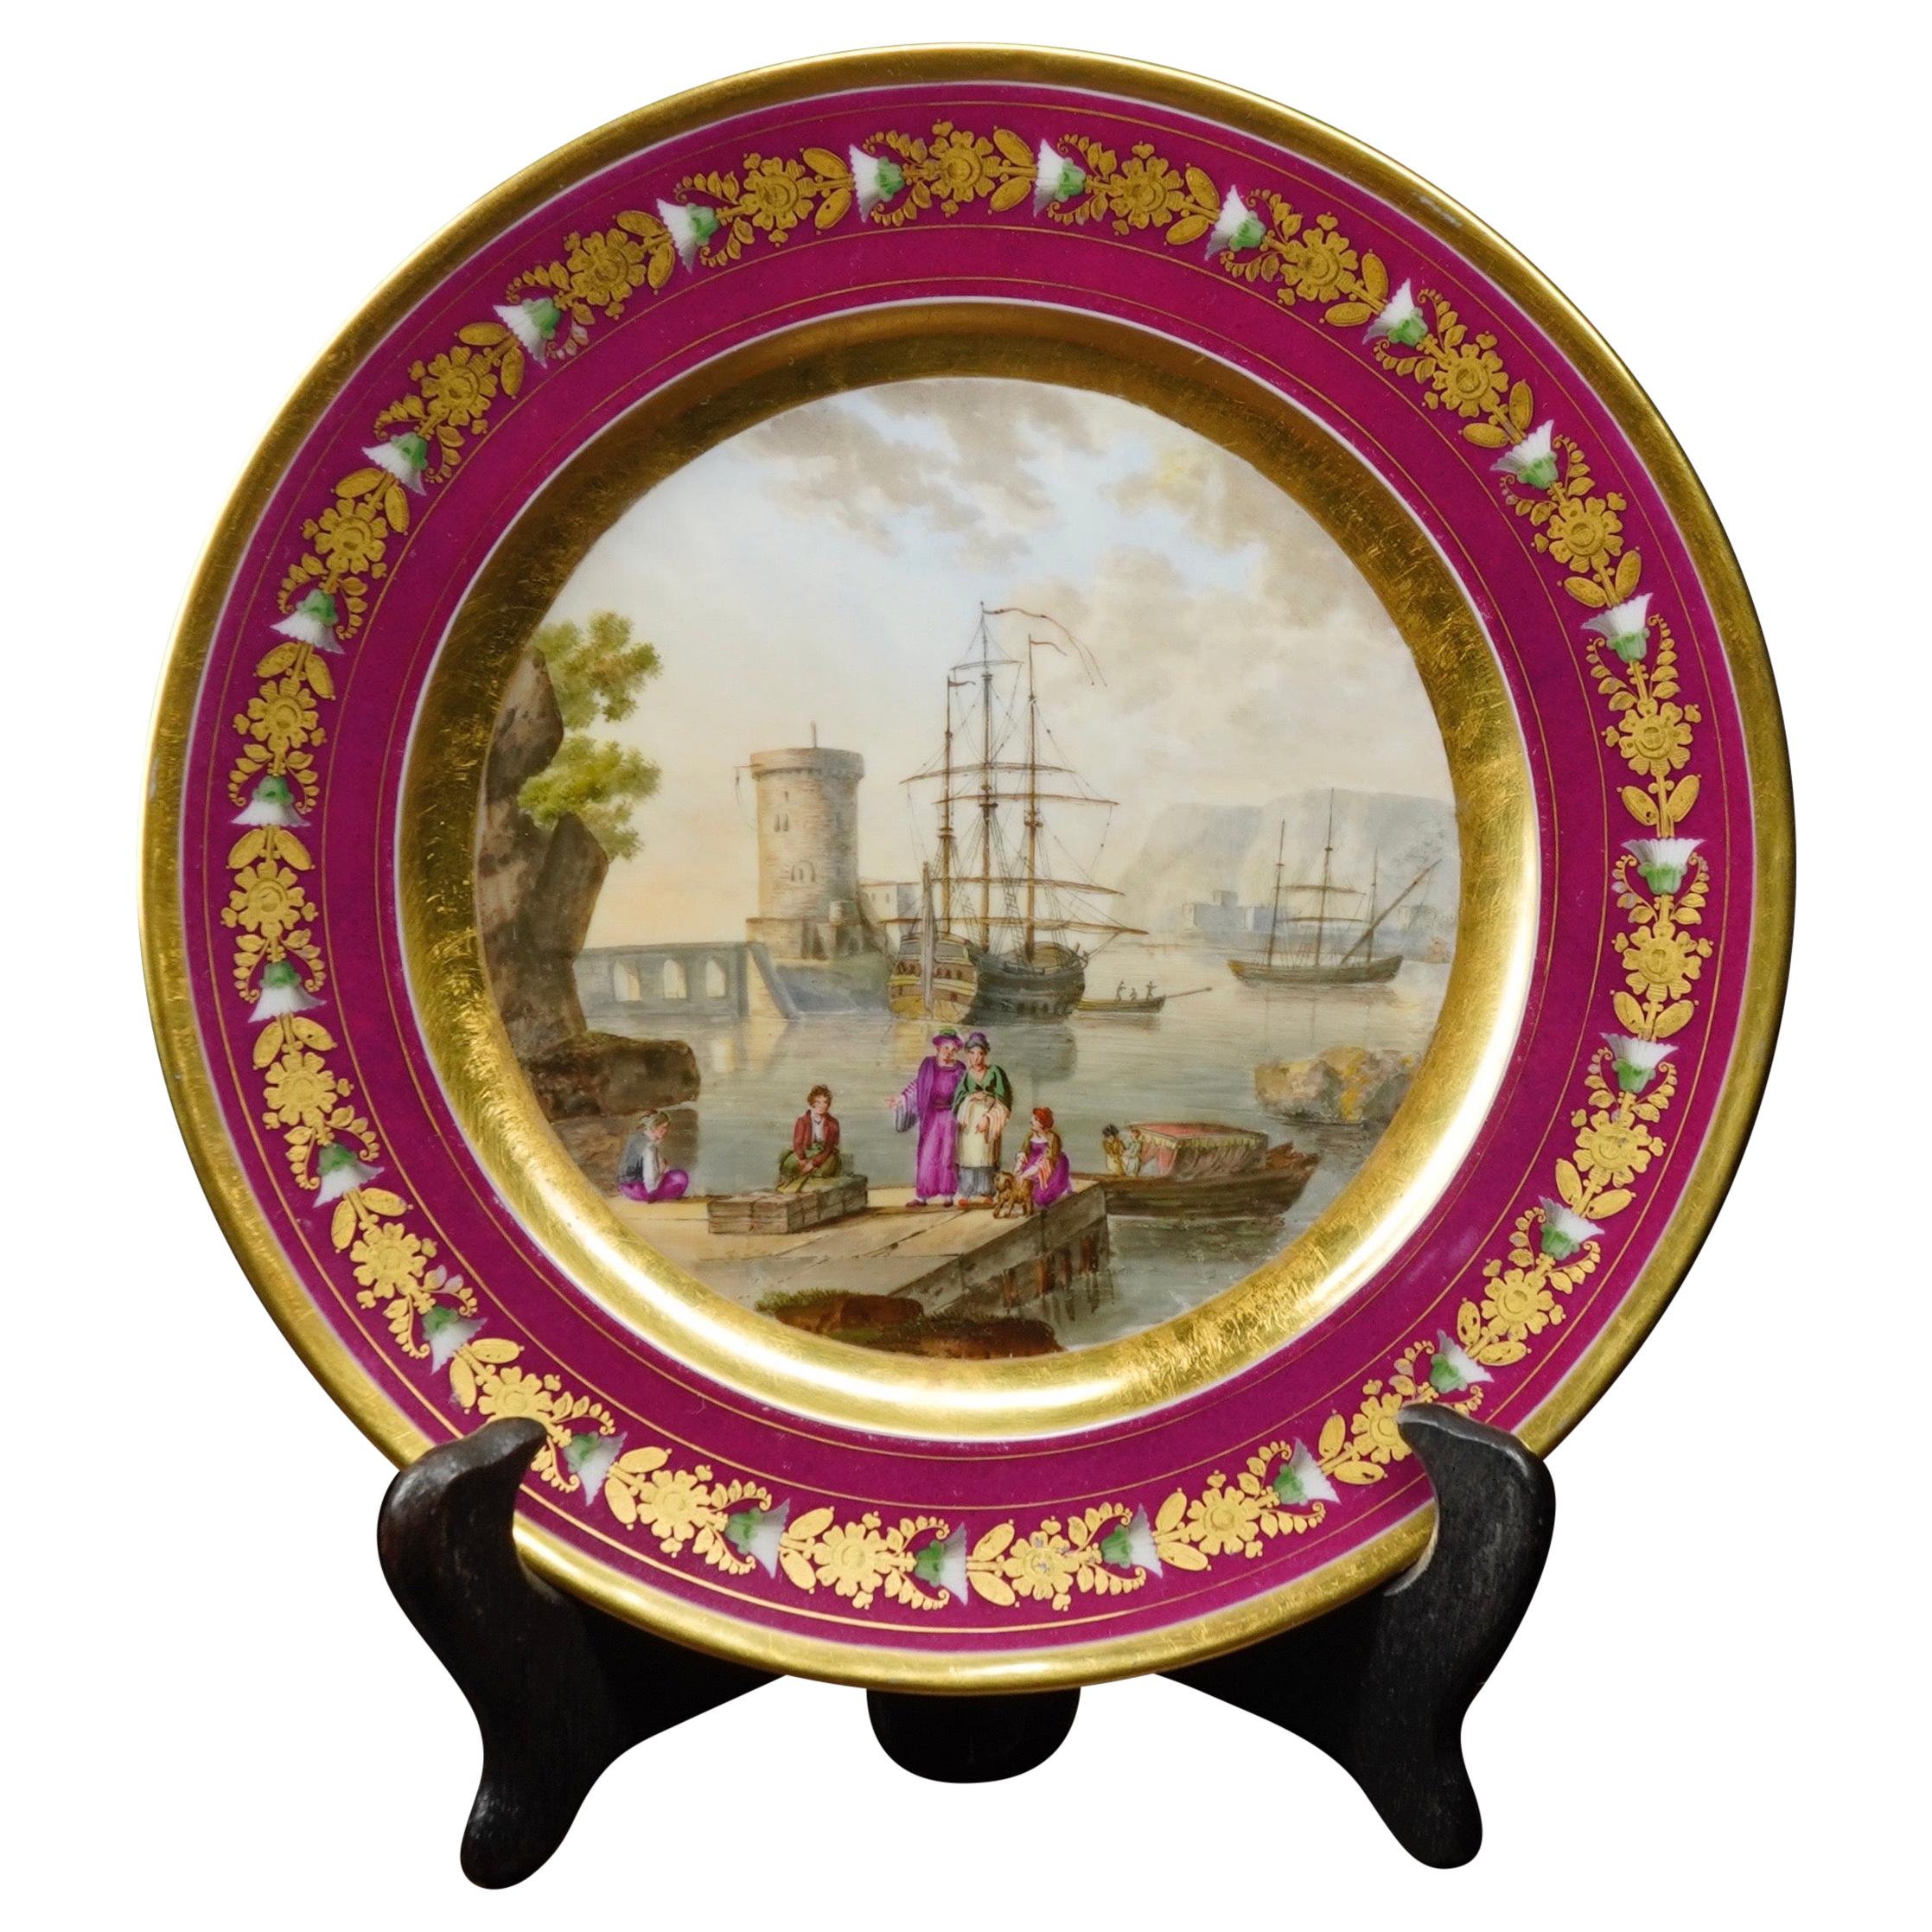 Paris Porcelain Plate with Harbour Scene after Lorrain, Attrib. Nast, circa 1810